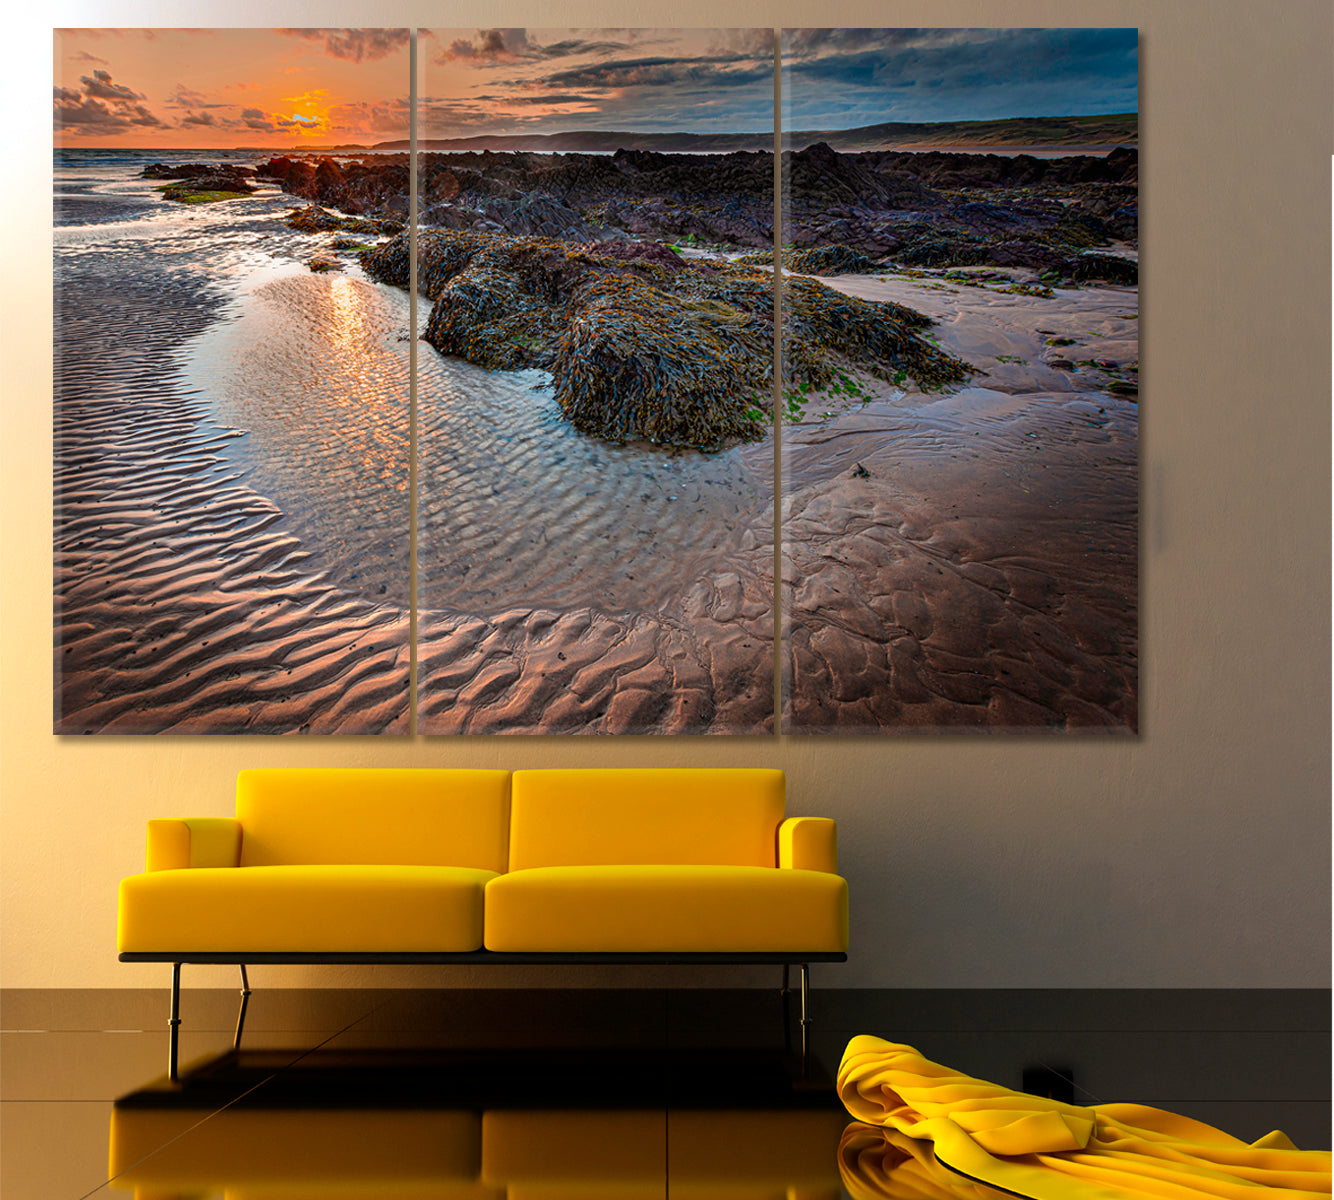 TRANQUILITY Ethereal Sunset Scene Beautiful Rocky Beach Scenery Landscape Fine Art Print Artesty 3 panels 36" x 24" 